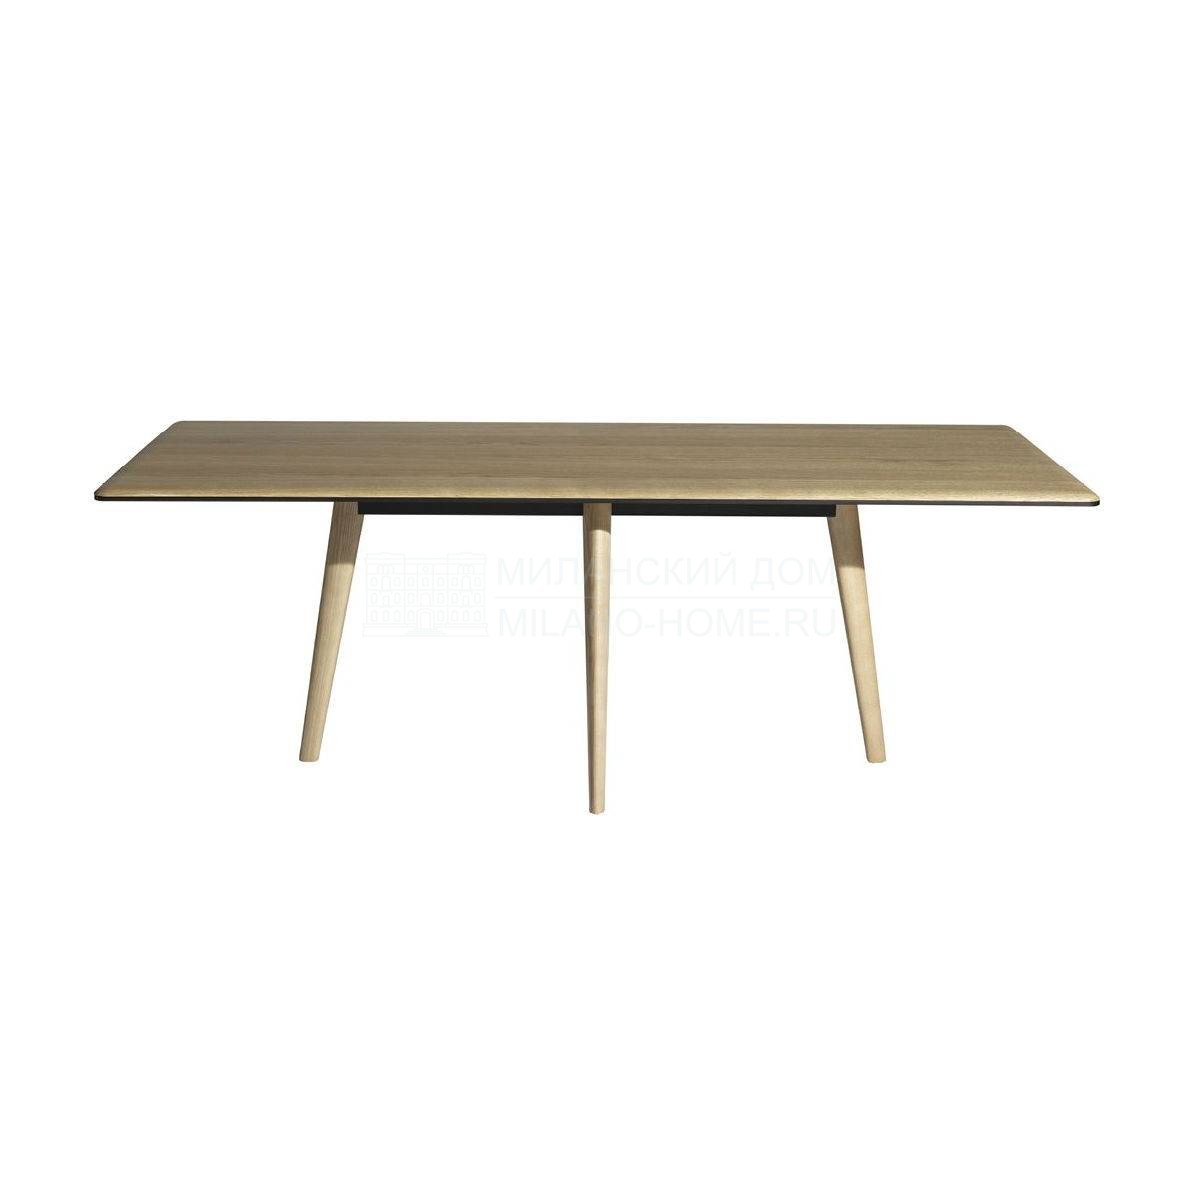 Обеденный стол Francois table из Италии фабрики DRIADE